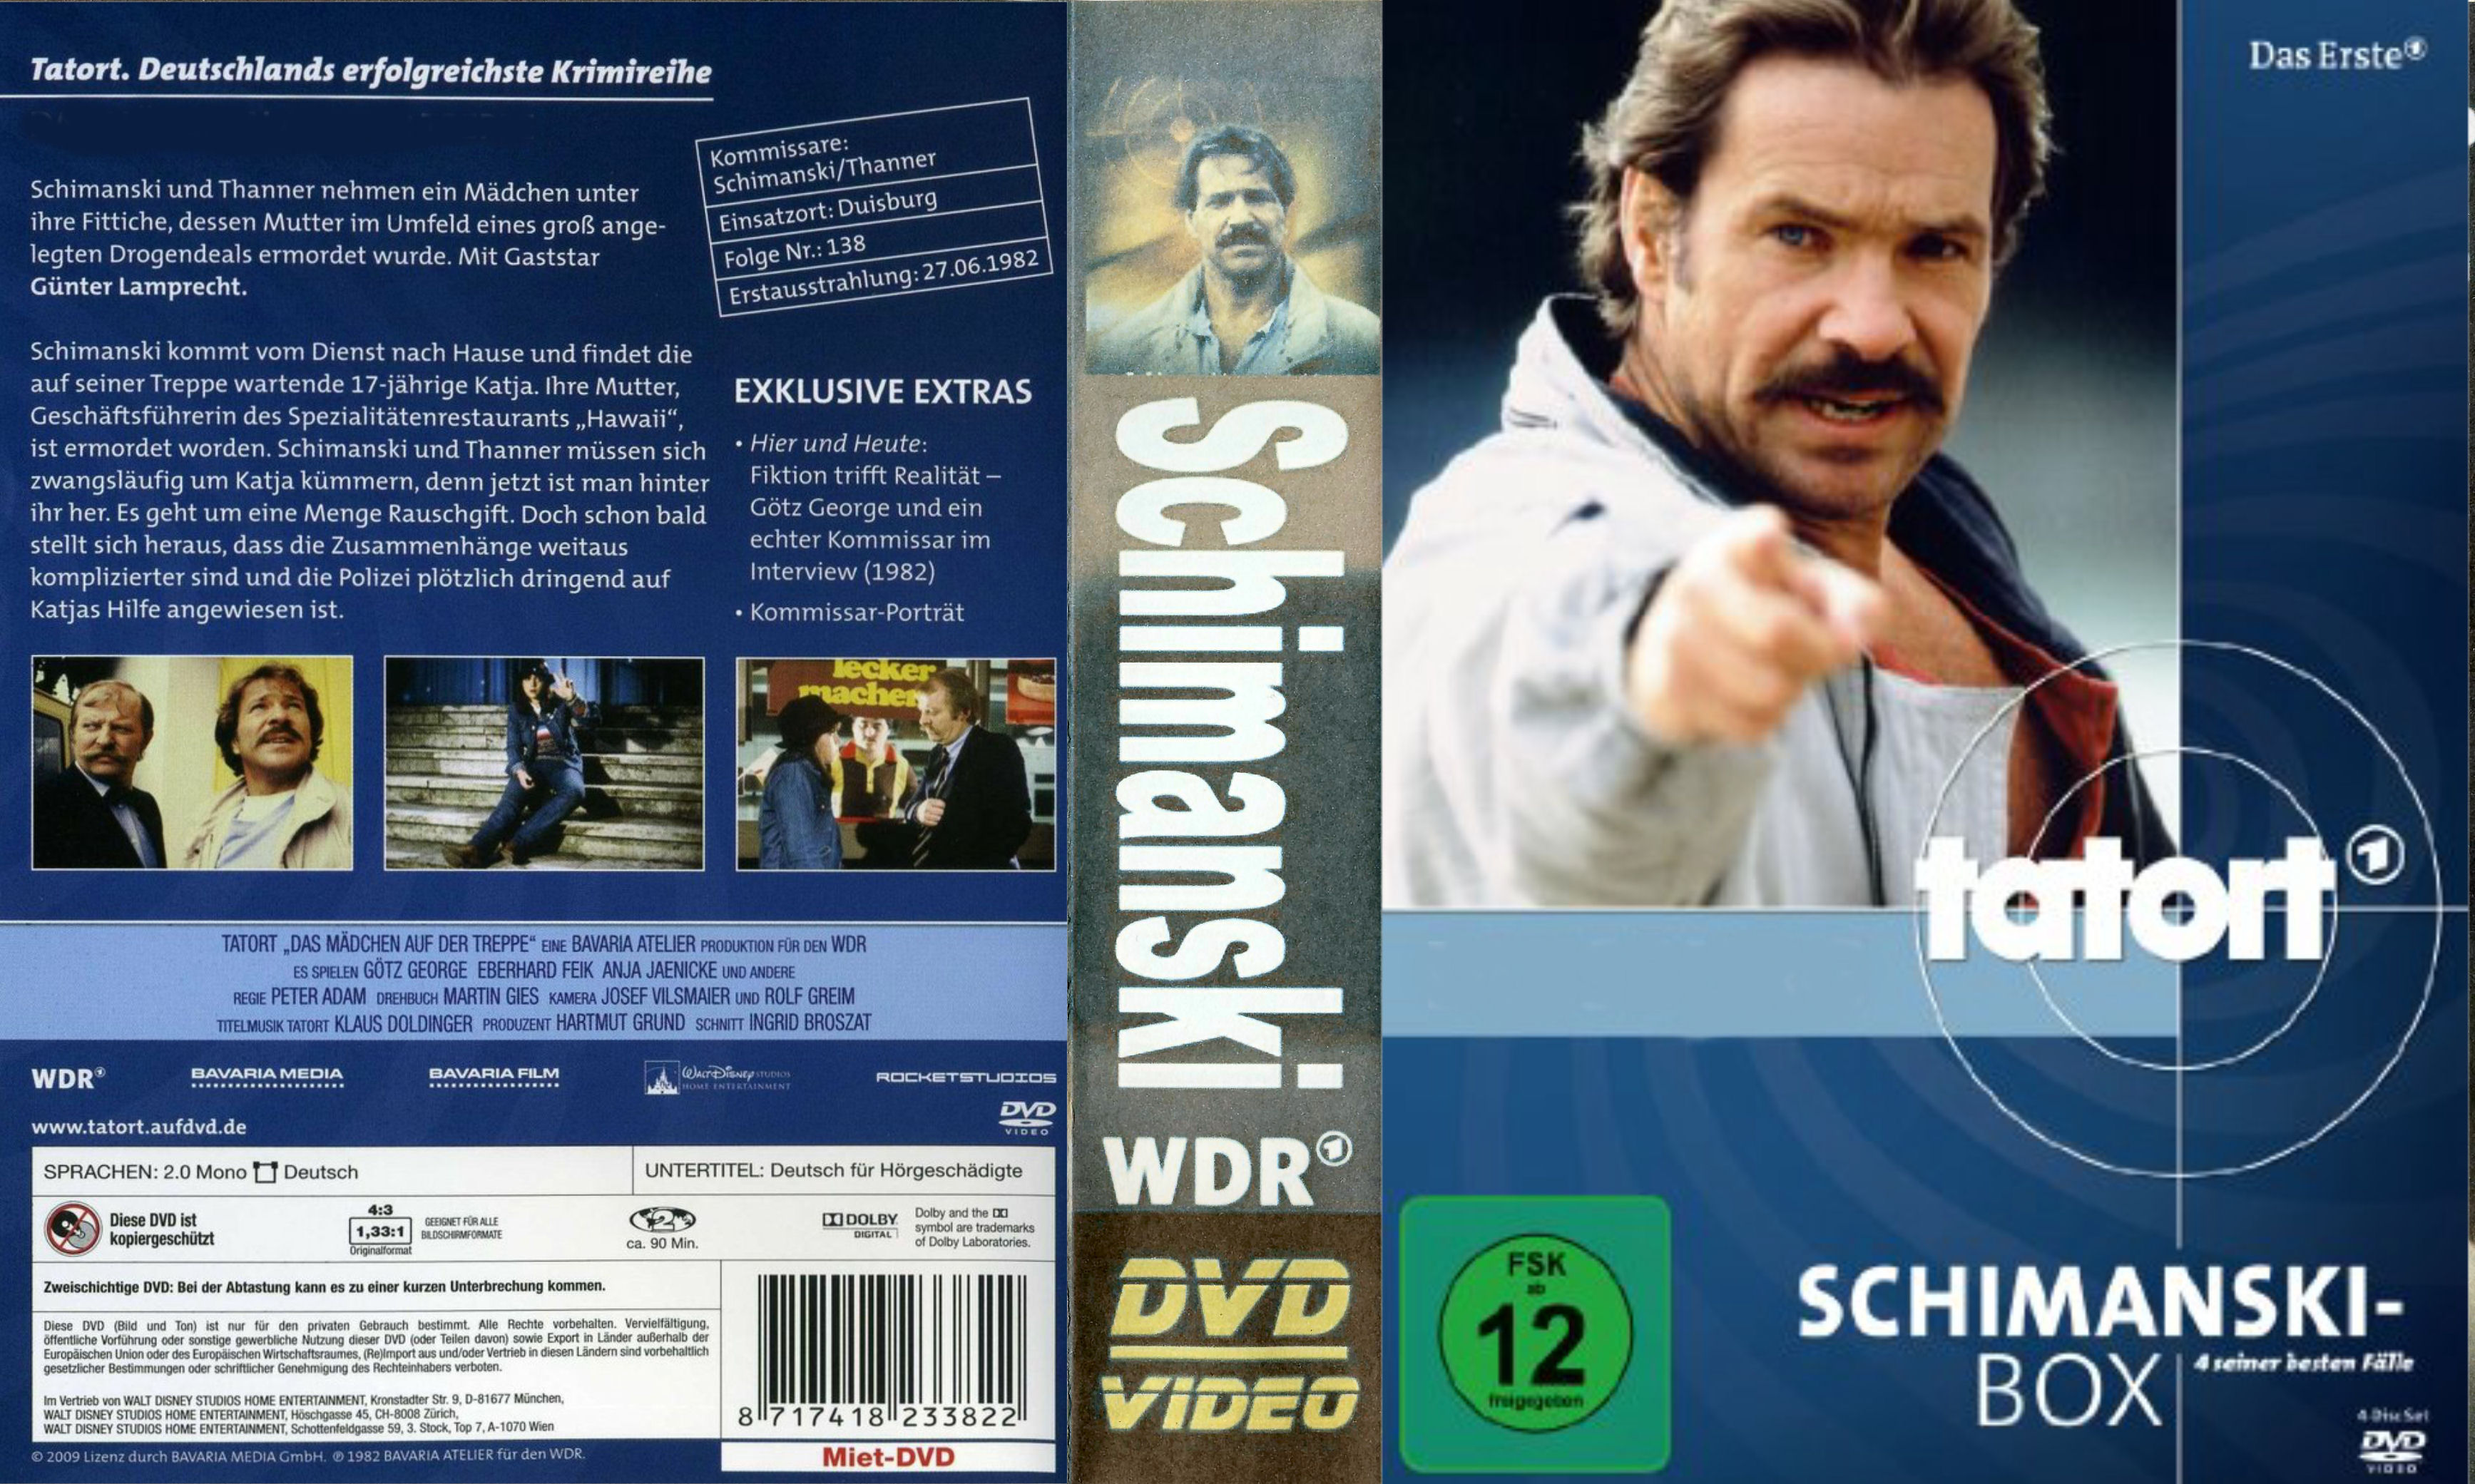 REPOST Schimanski Collectie Tatort No Subs - DvD 22